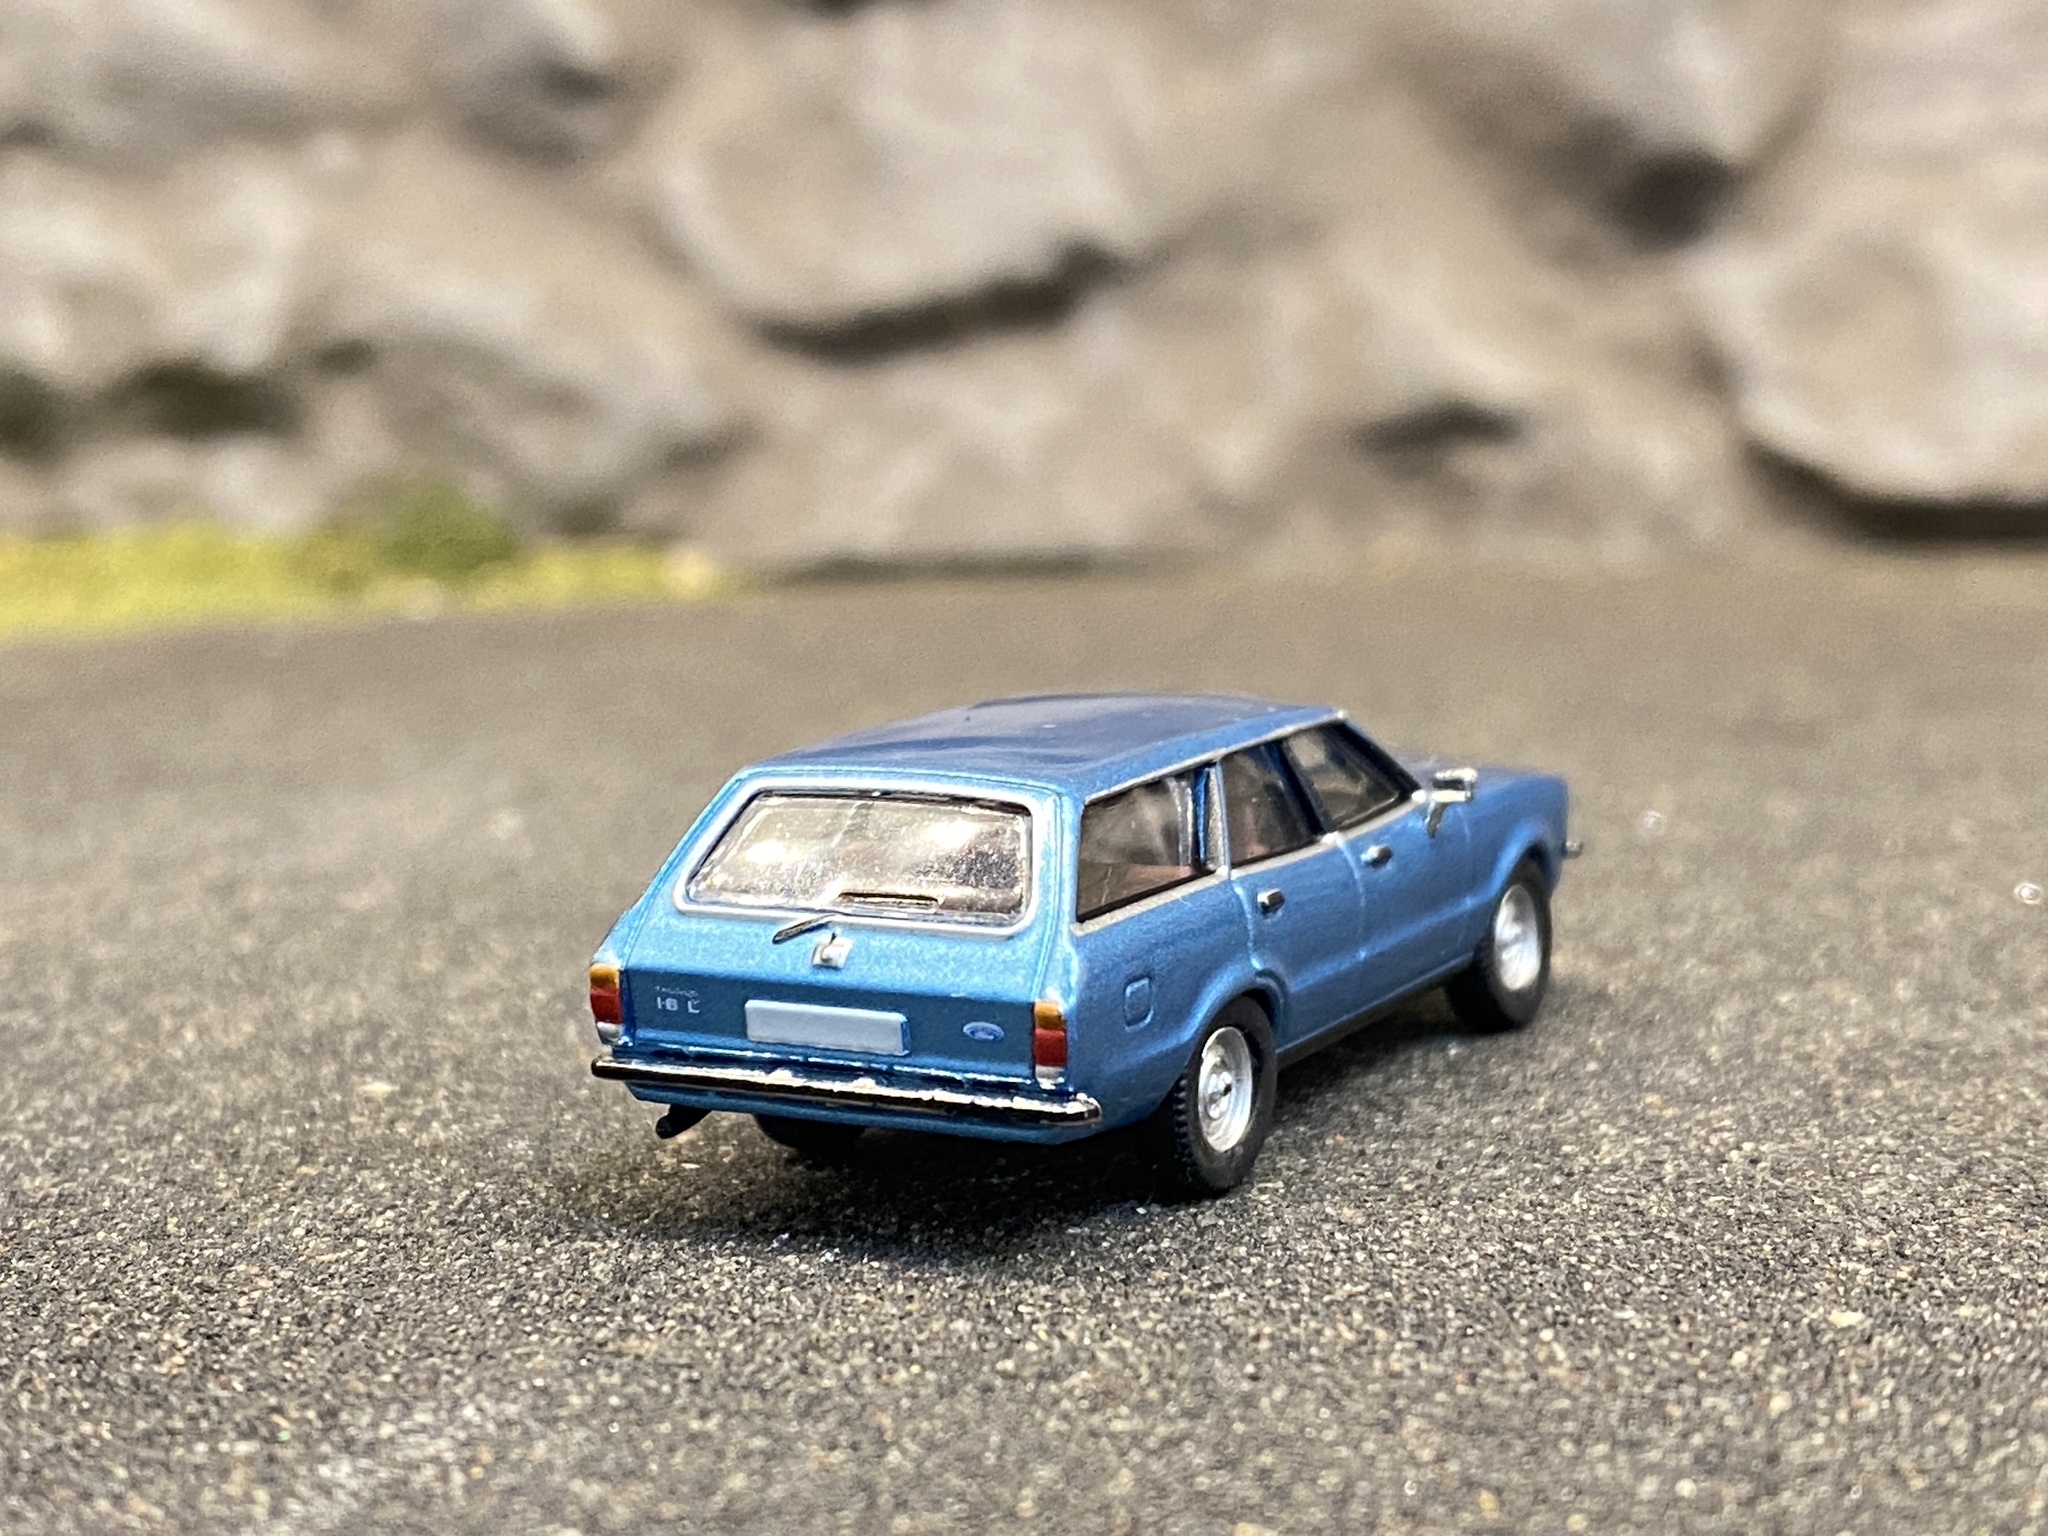 Skala 1/87 - Ford Taunus TC 2 Turnier, Blå metallic från PCX87